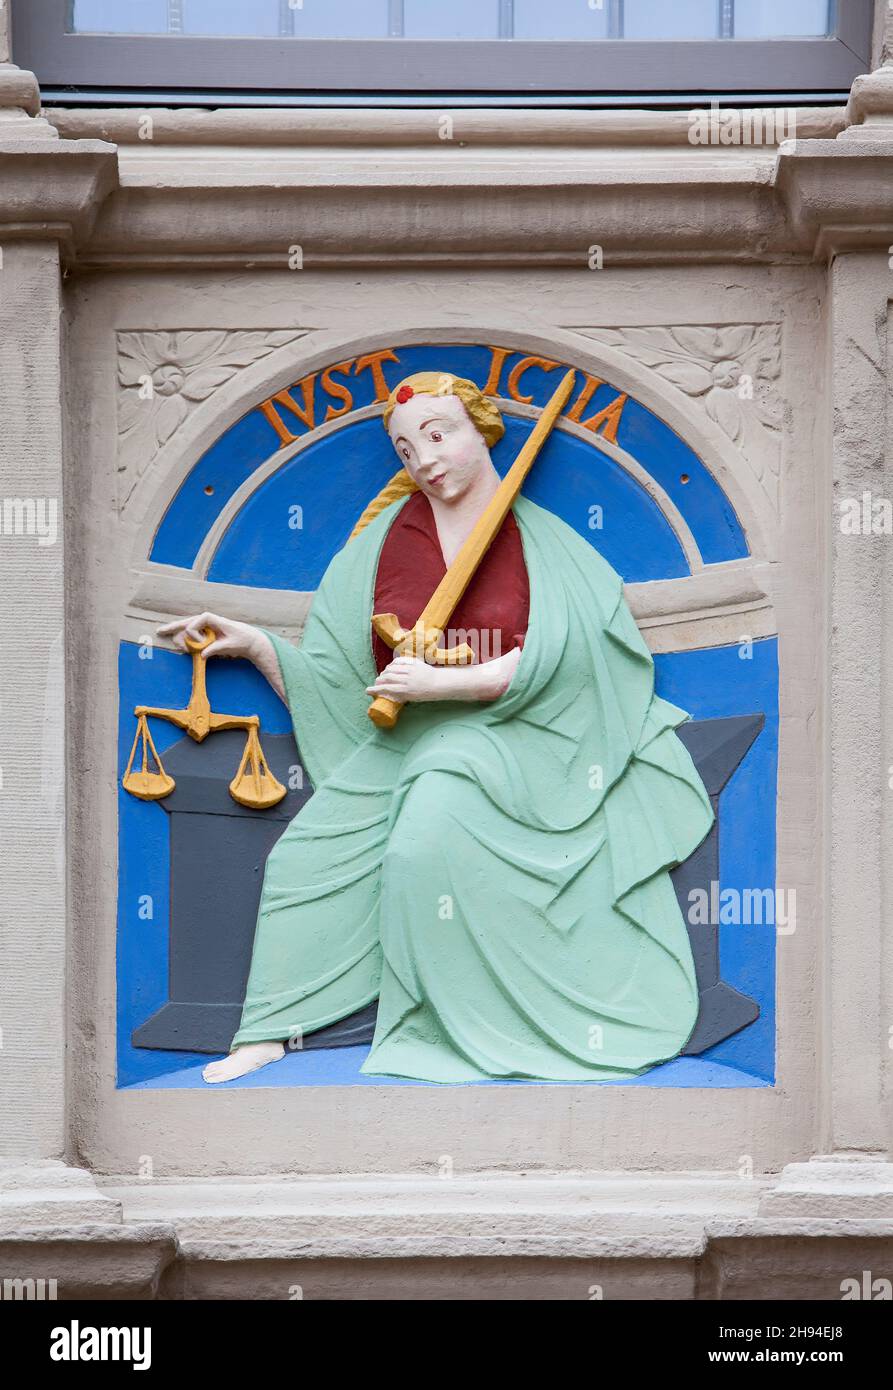 Iusticia or Justitia, Latin for justice, decoration of the facade, Hexenbürgermeisterhaus, Lemgo, North Rhine-Westphalia, Germany, Europe Stock Photo